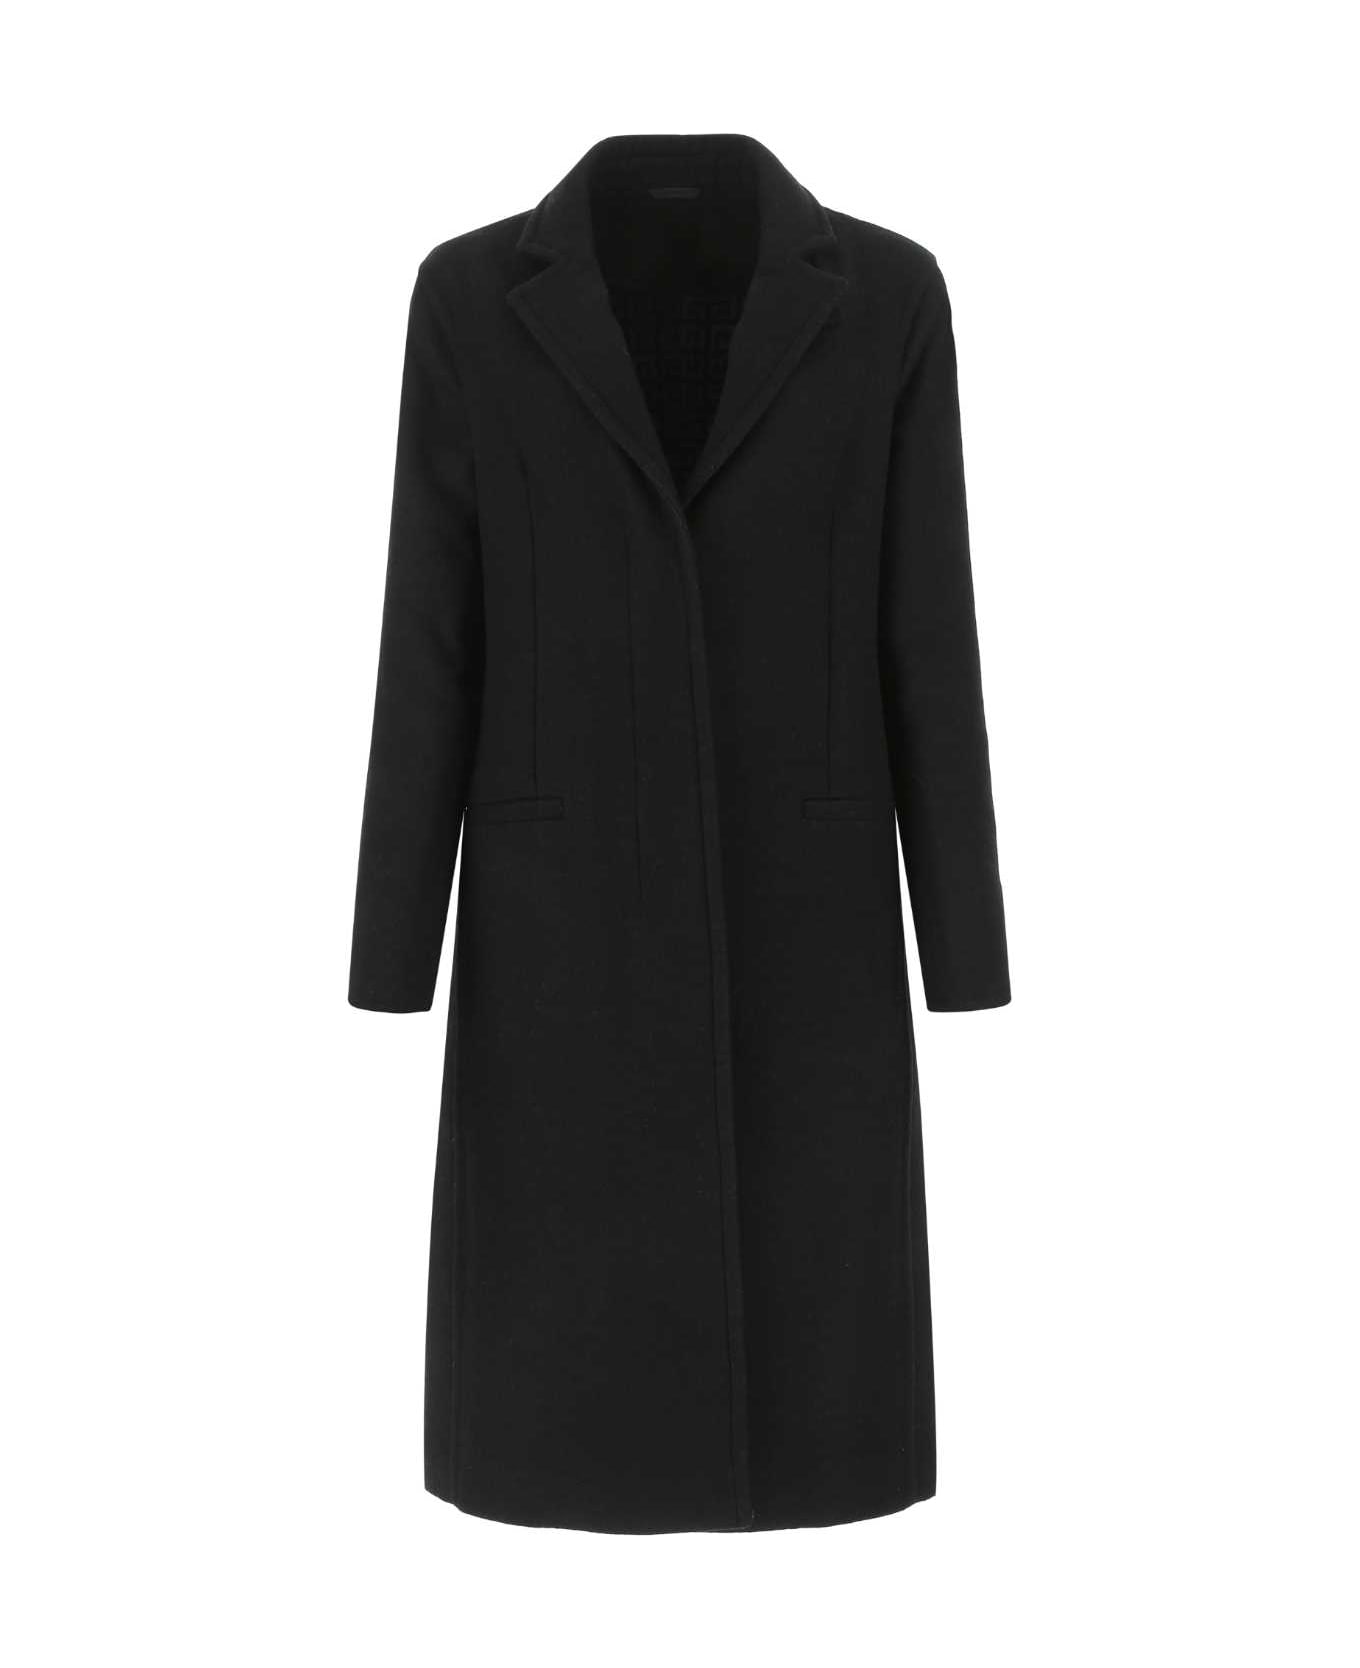 Givenchy Black Wool Blend Coat - 002